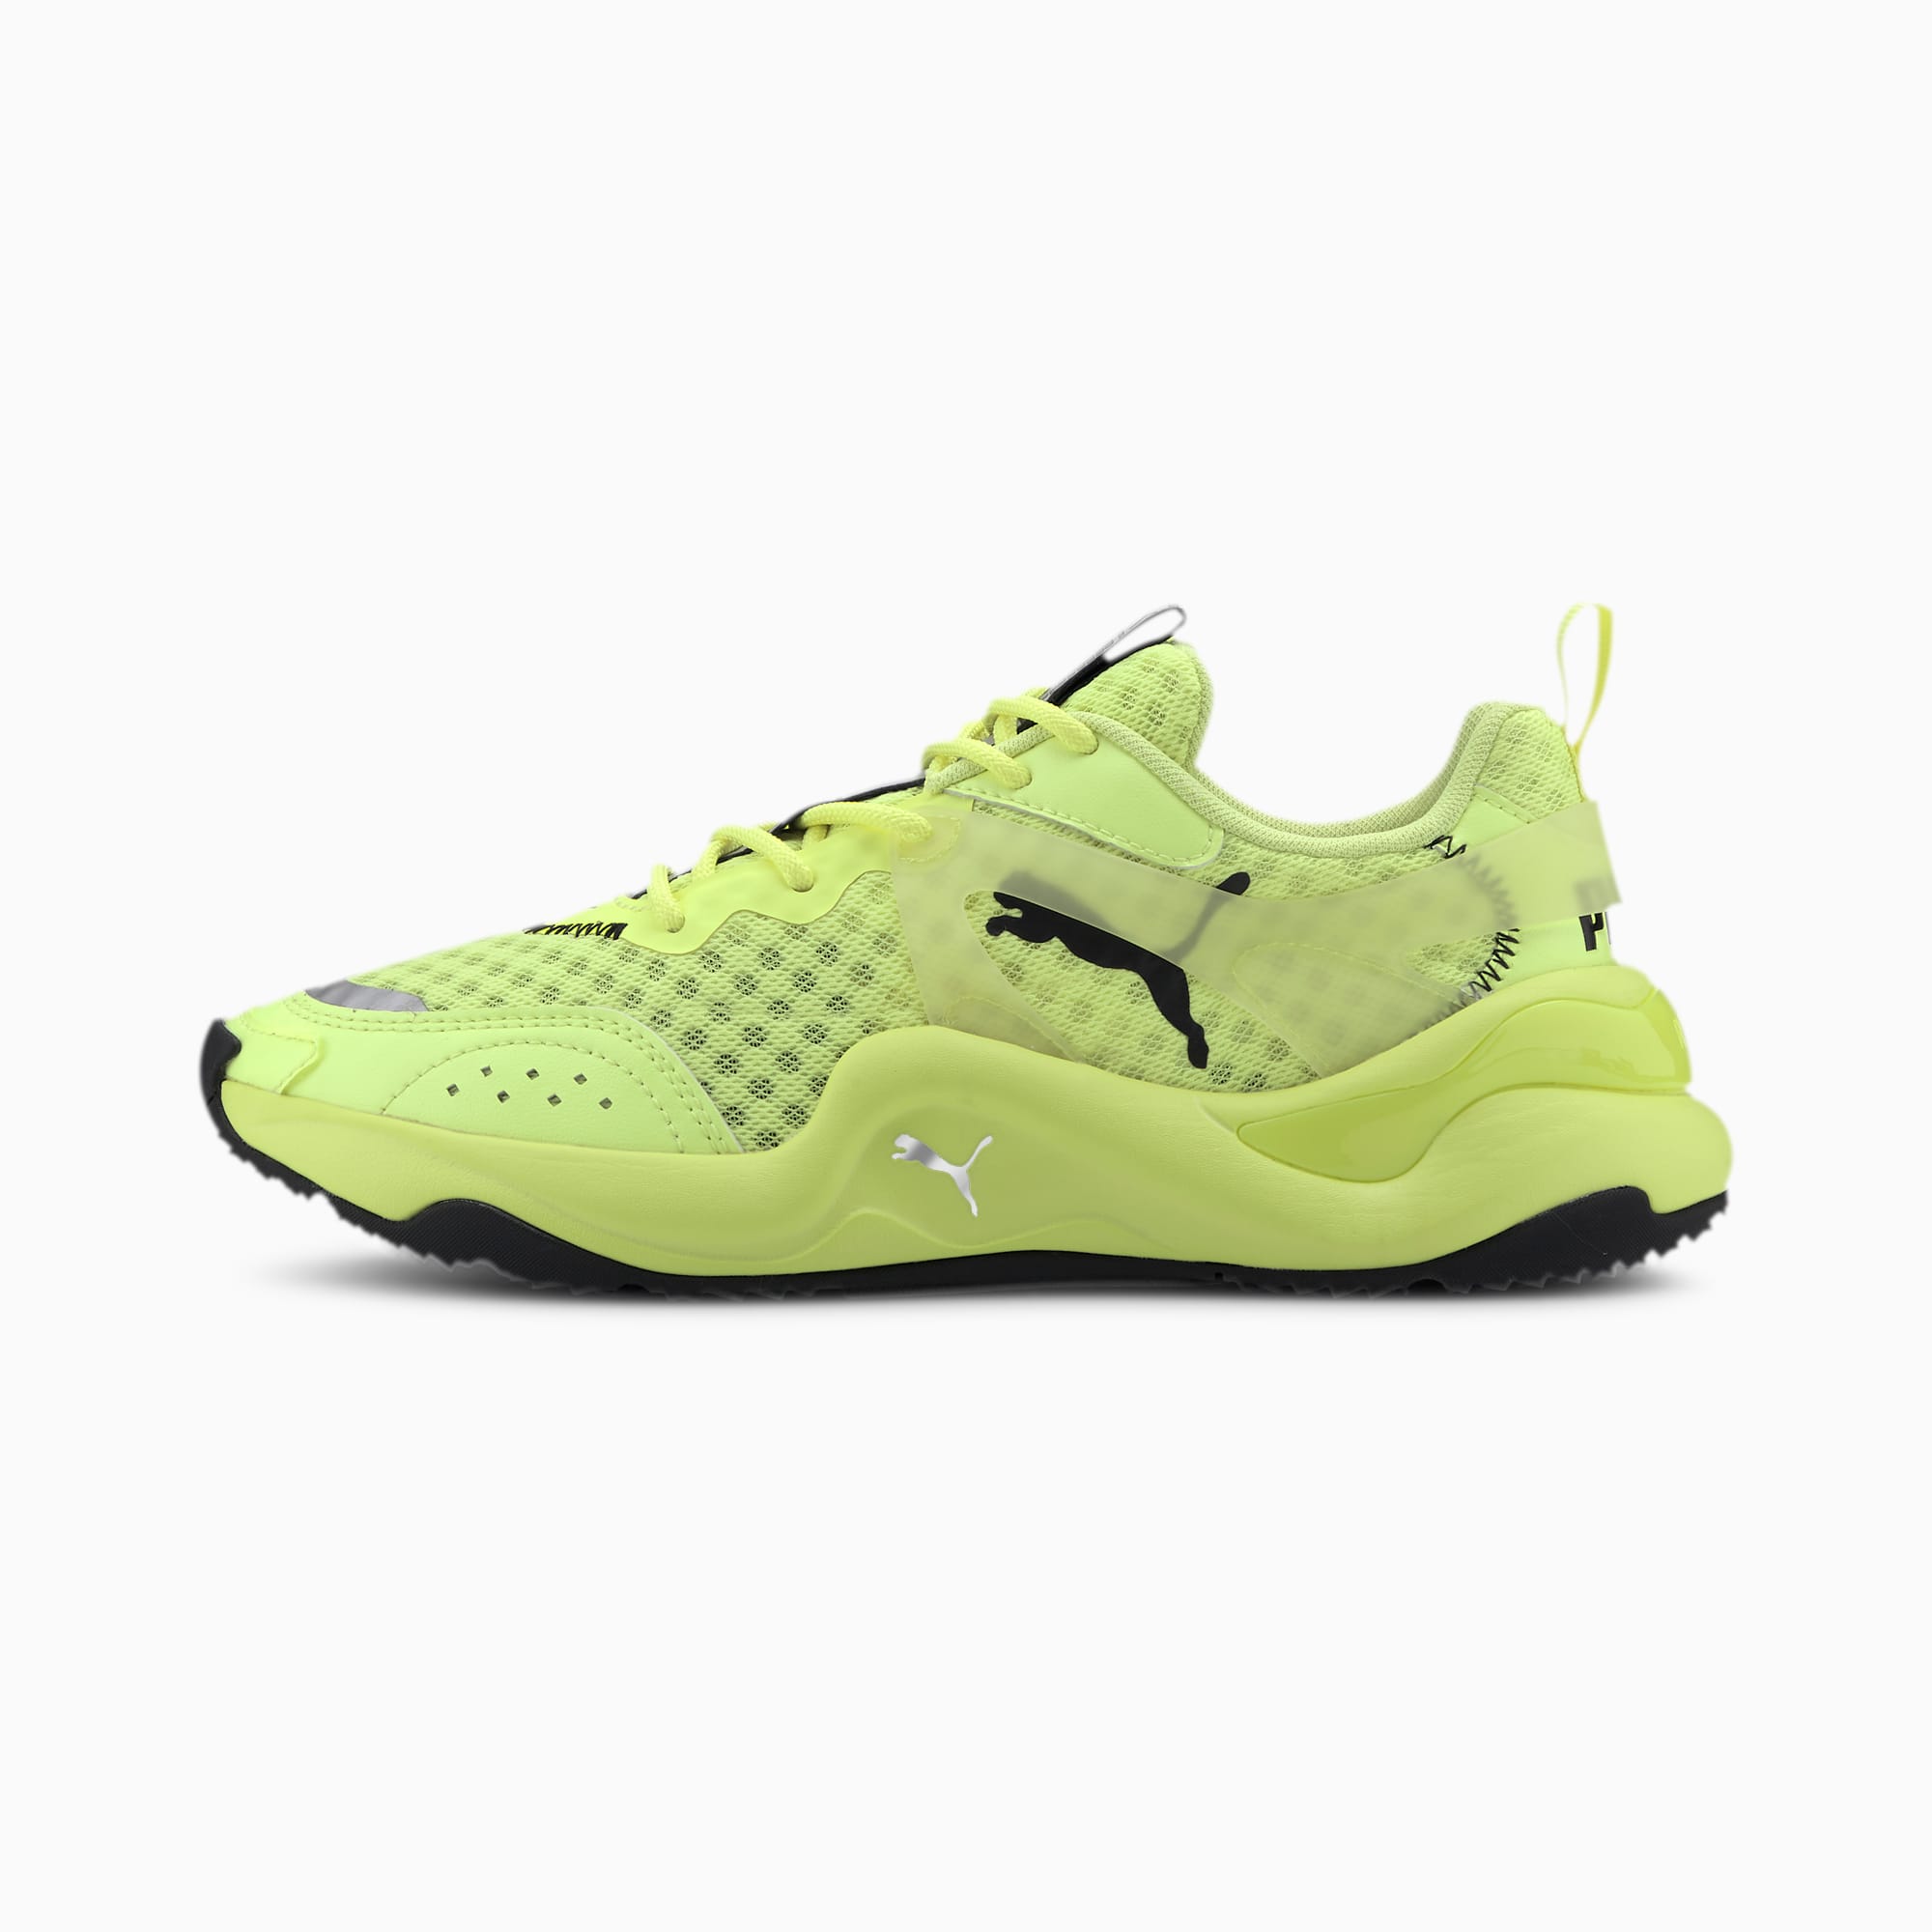 puma fluorescent shoes